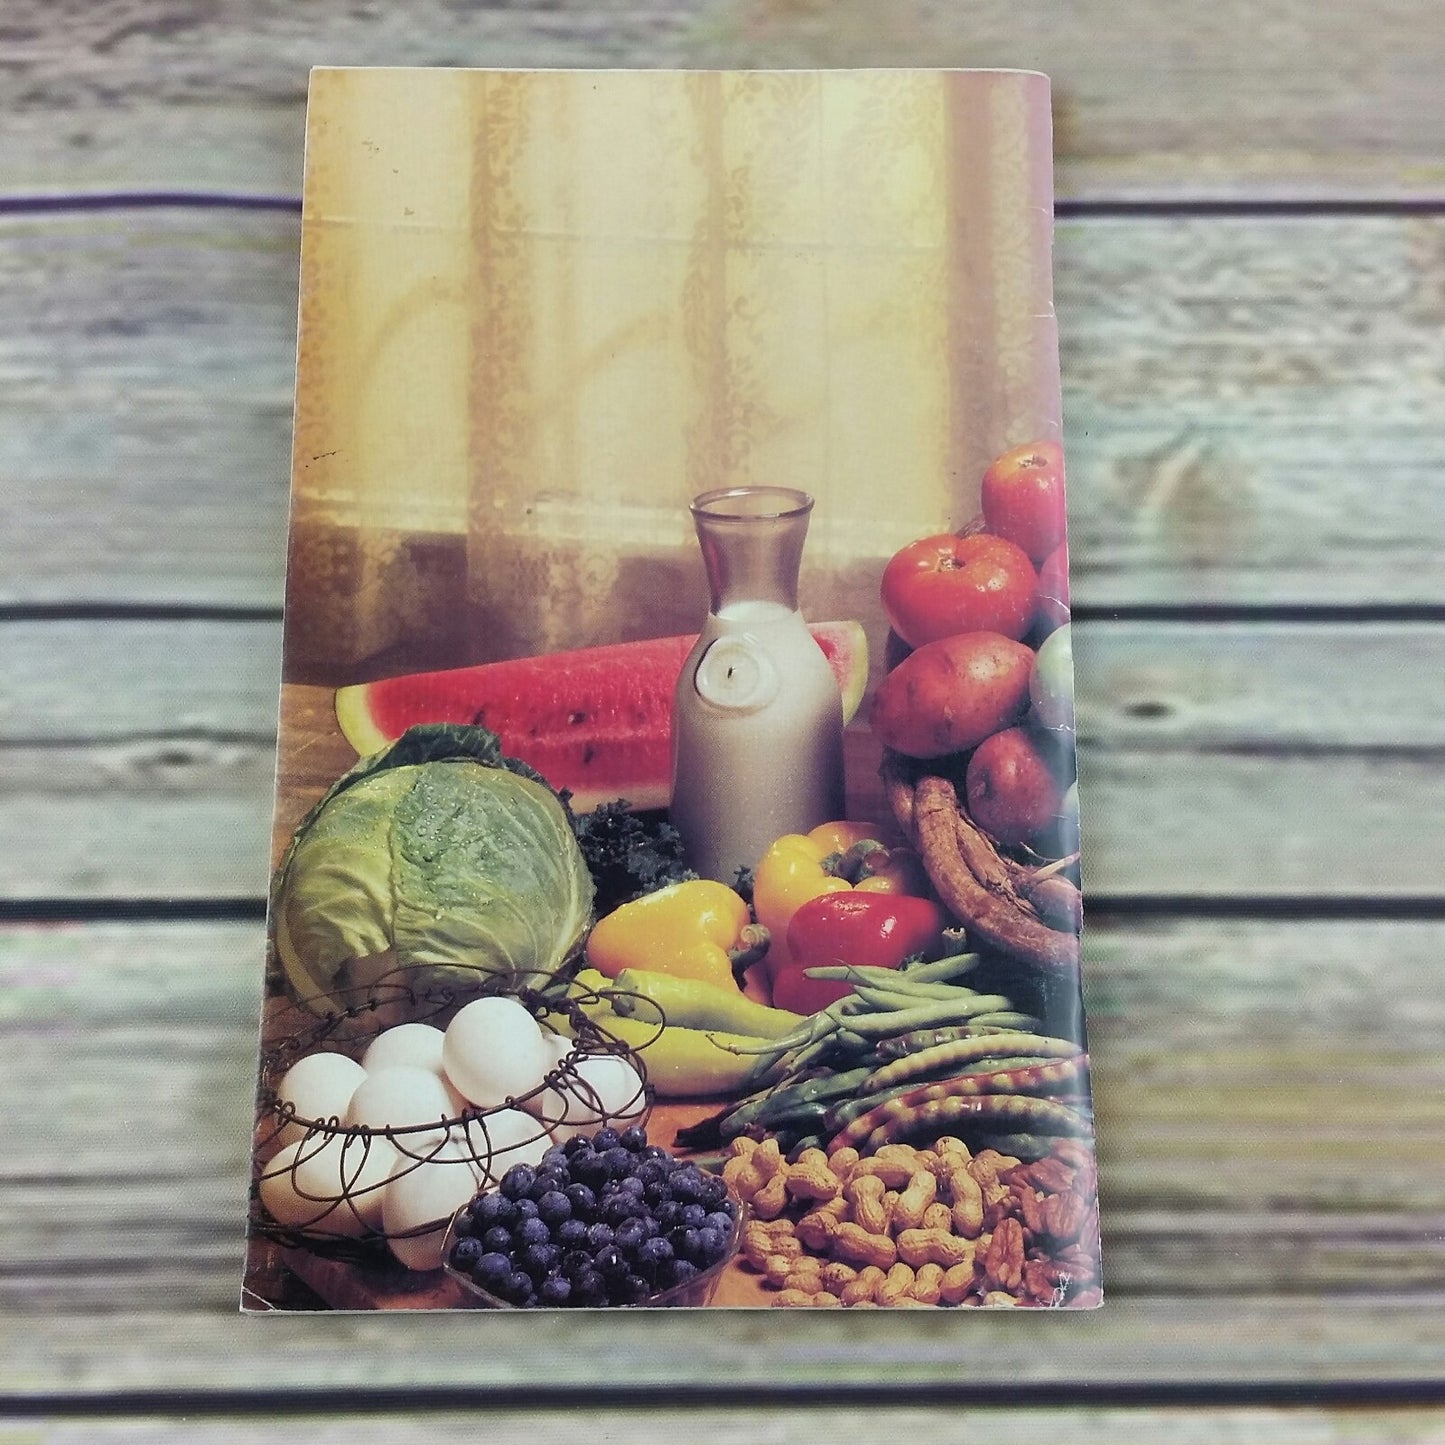 Vintage Cookbook Vidalia Onion Store Recipe Book 1994 Paperback Booklet - At Grandma's Table